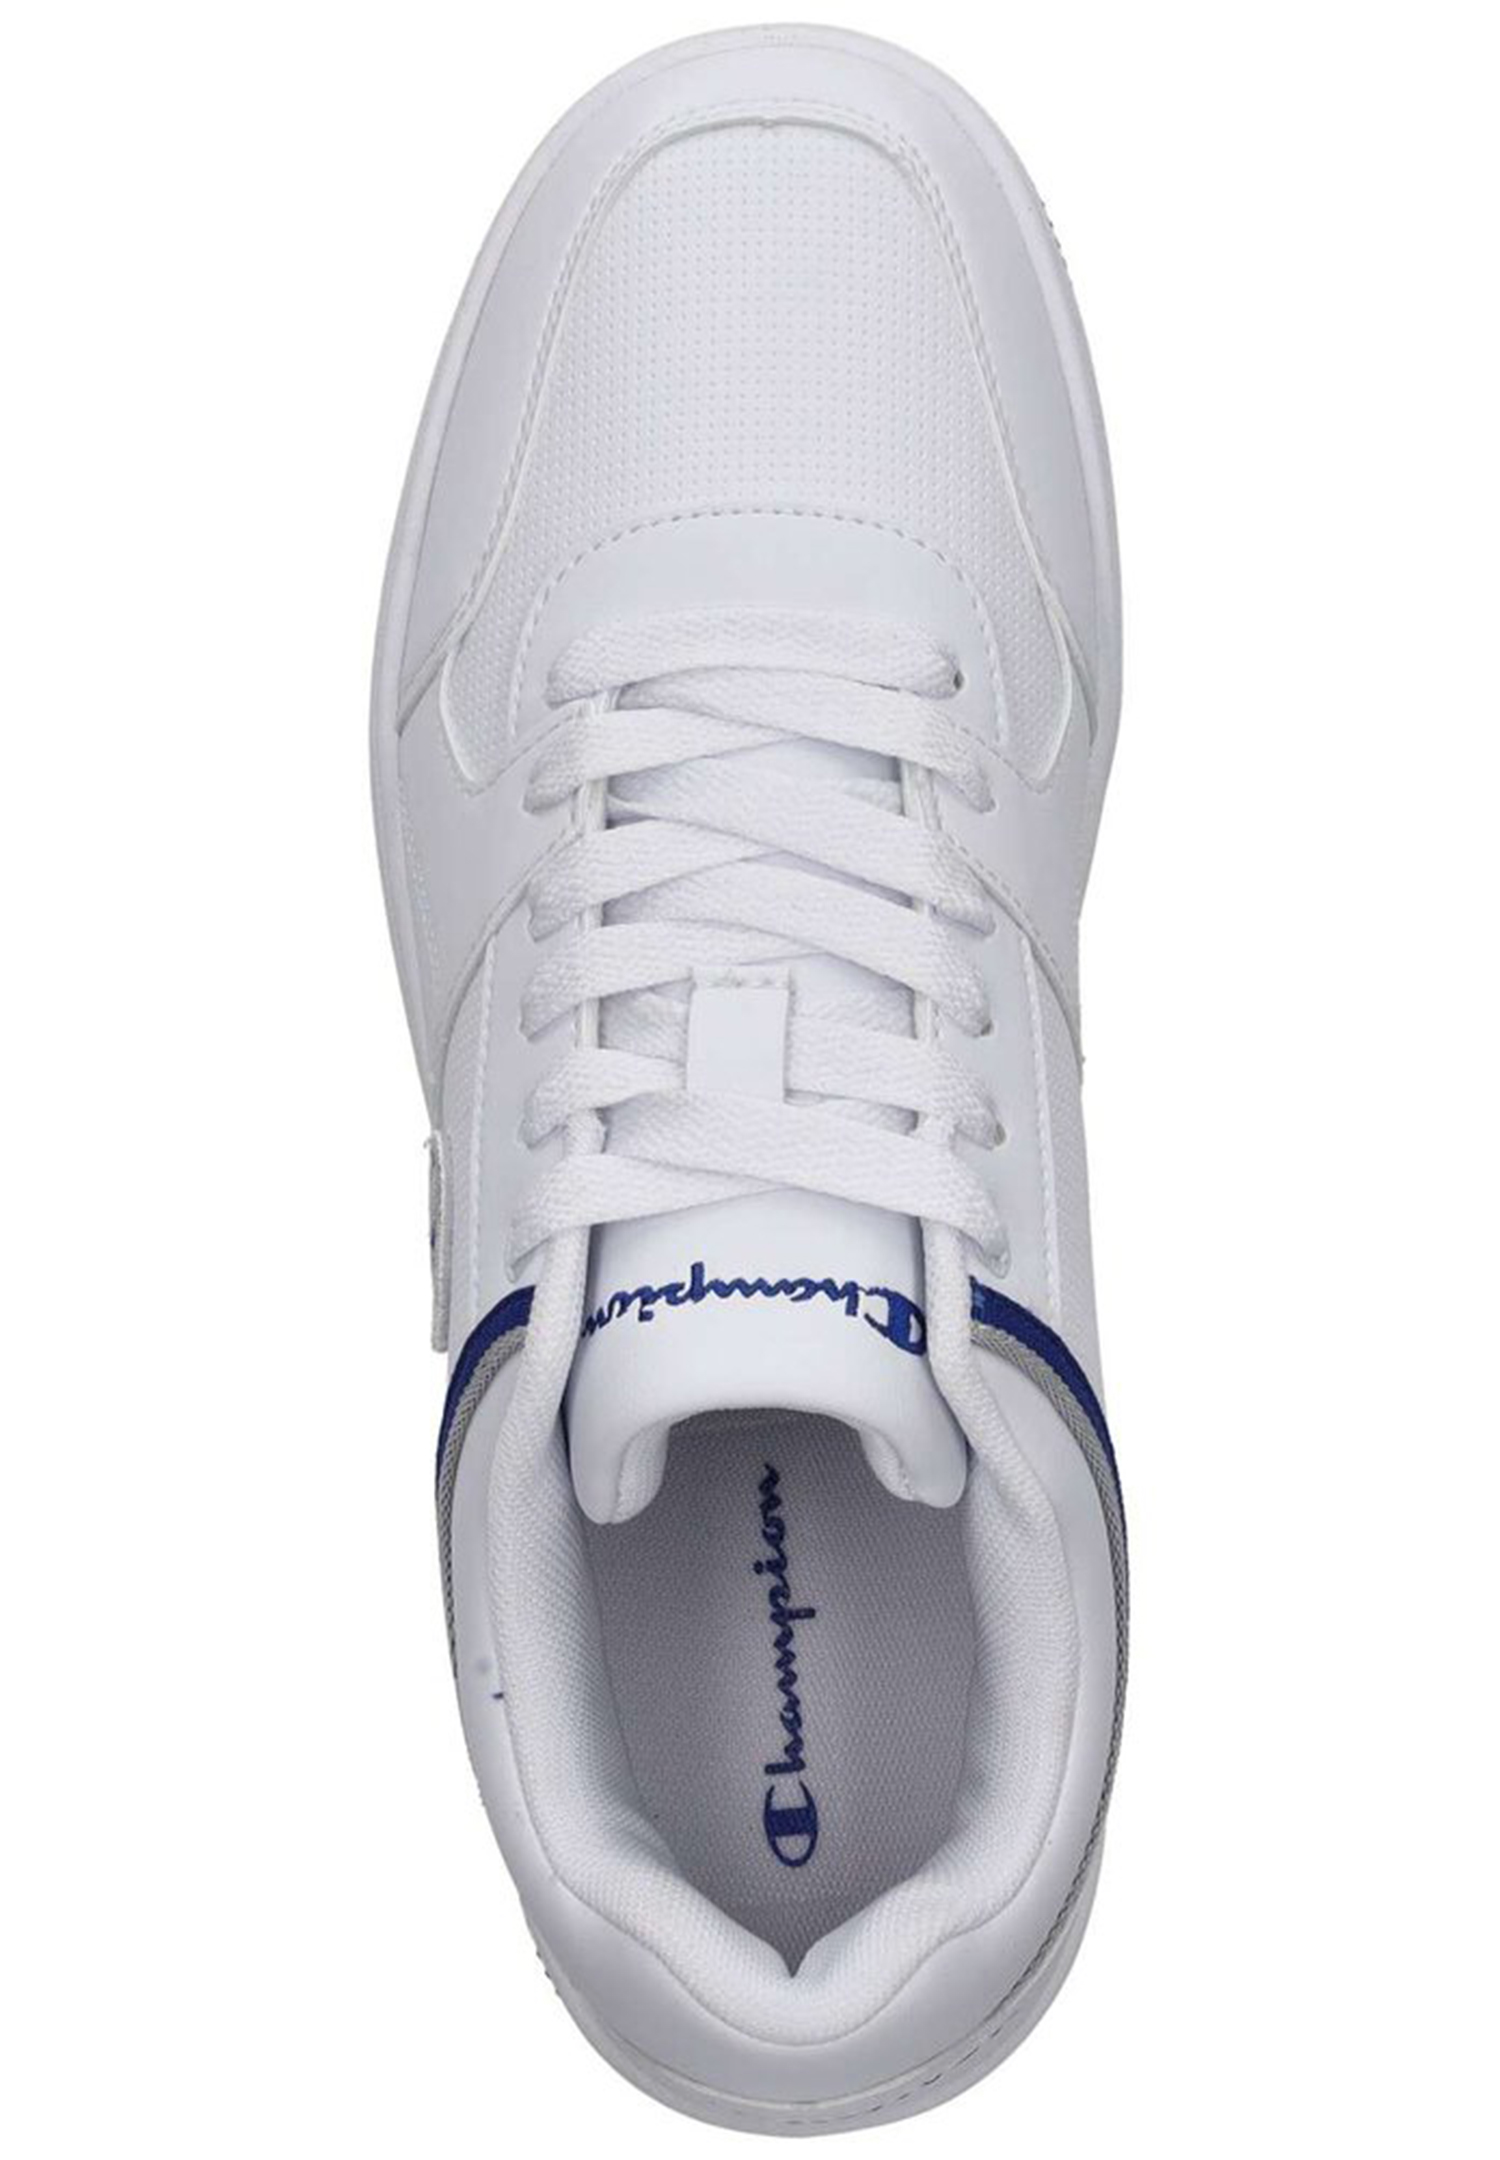 Champion REBOUND LOW Herren Sneaker S21905-CHA-WW004 weiß/grau/blau  